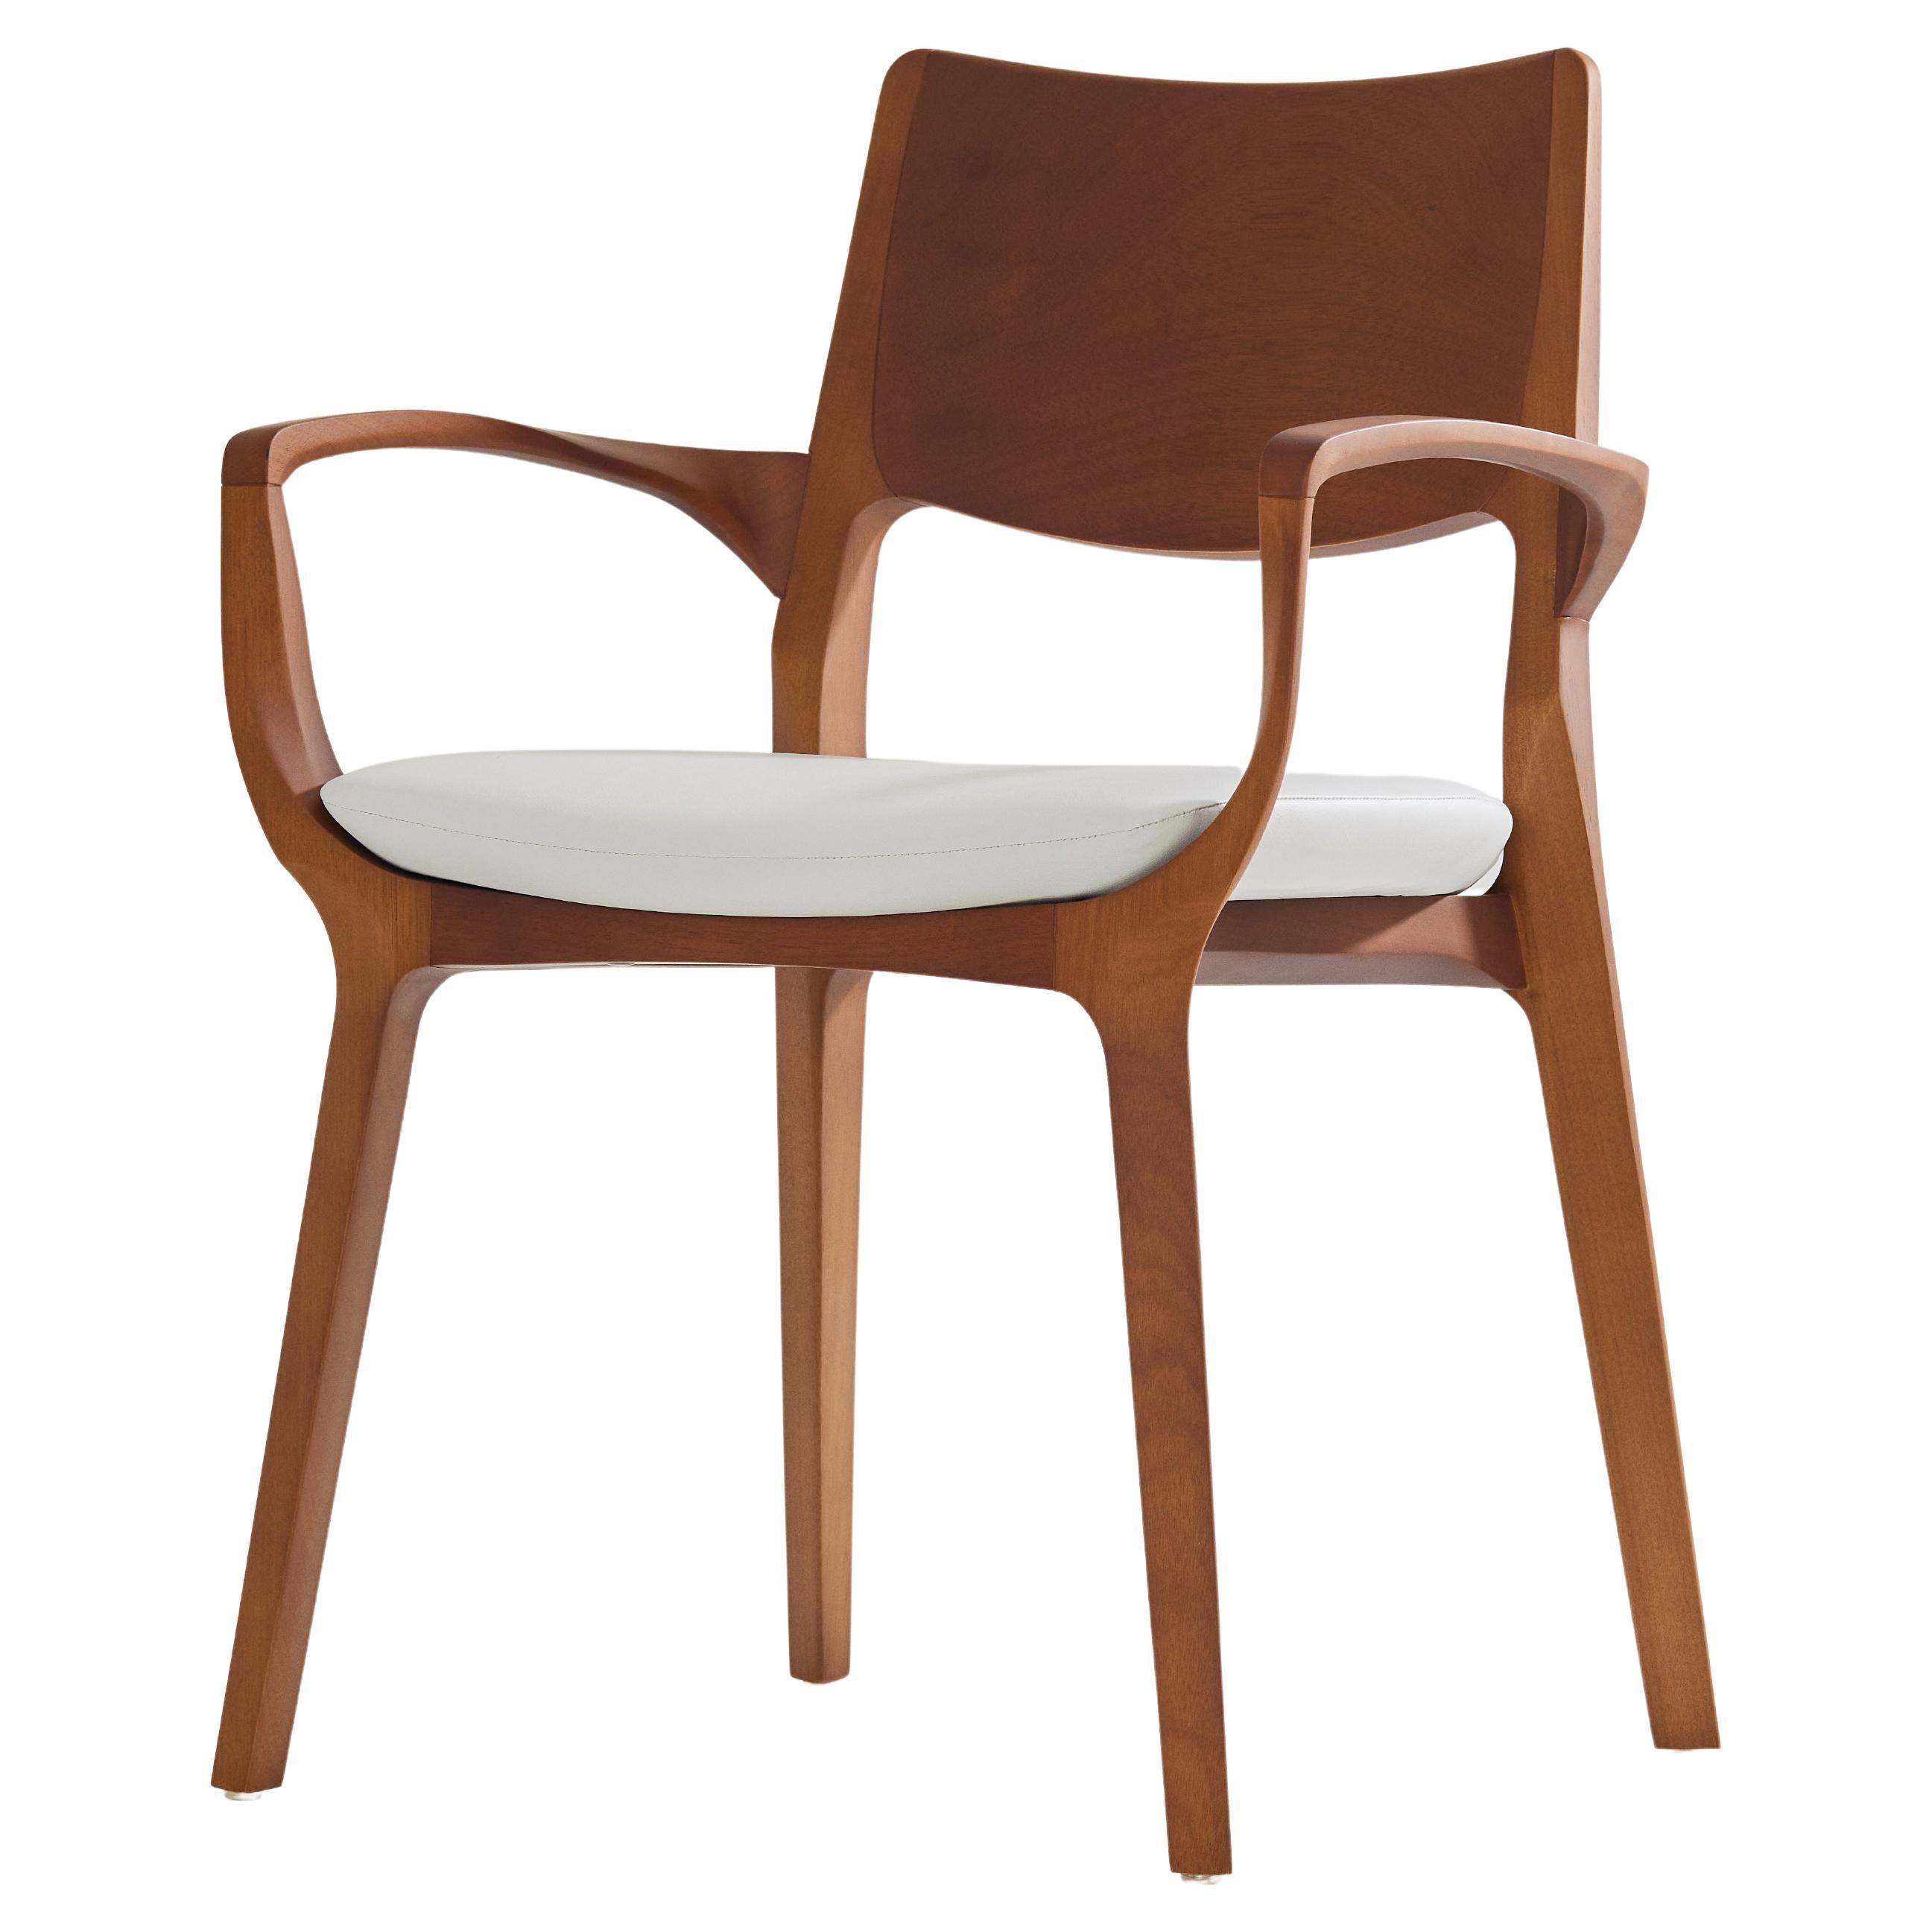 Aurora Stuhl im postmodernen Stil aus Honey Massivholz, Sitzfläche aus veganem Leder